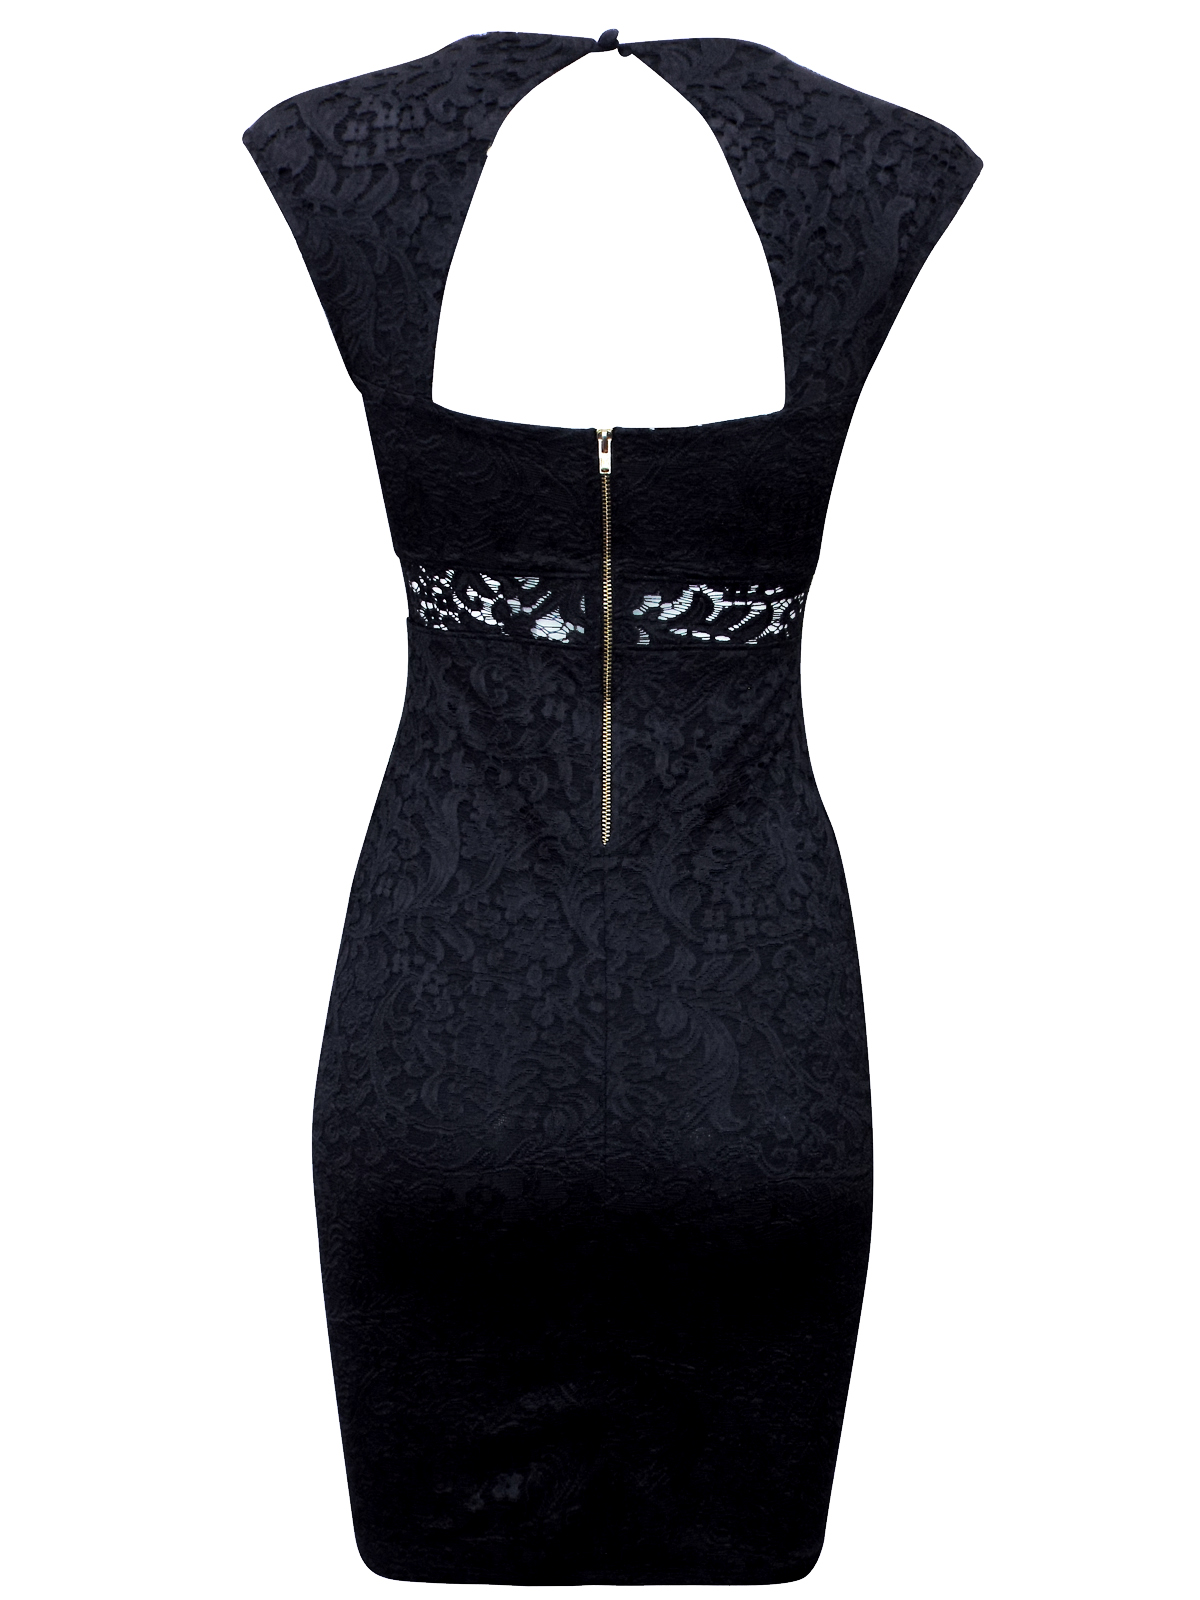 R1ver 1sland BLACK Lace Peek-A-Boo Bodycon Dress - Size 6 to 16